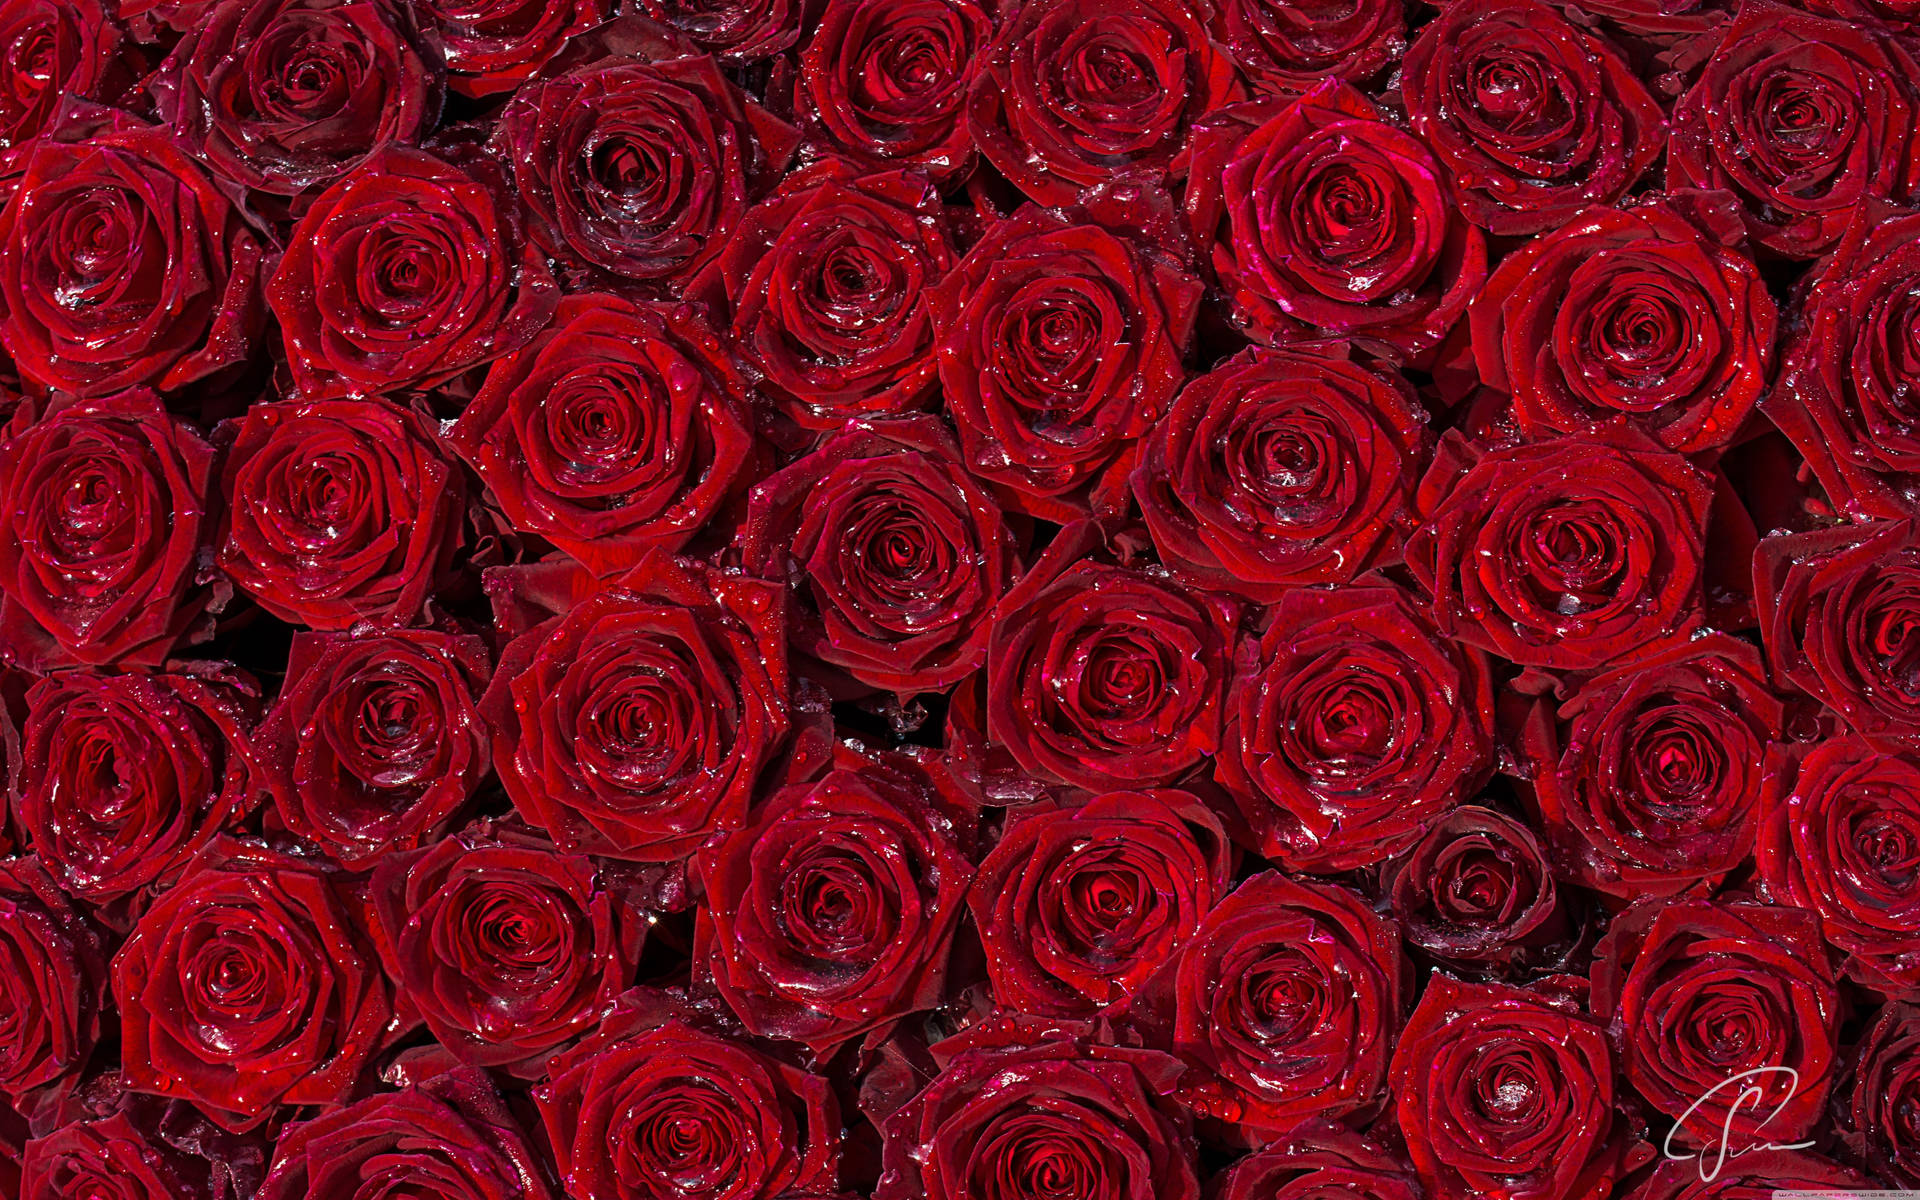 rose wallpaper hd backgrounds images | Growing roses, Gardening for  beginners, Rose garden design